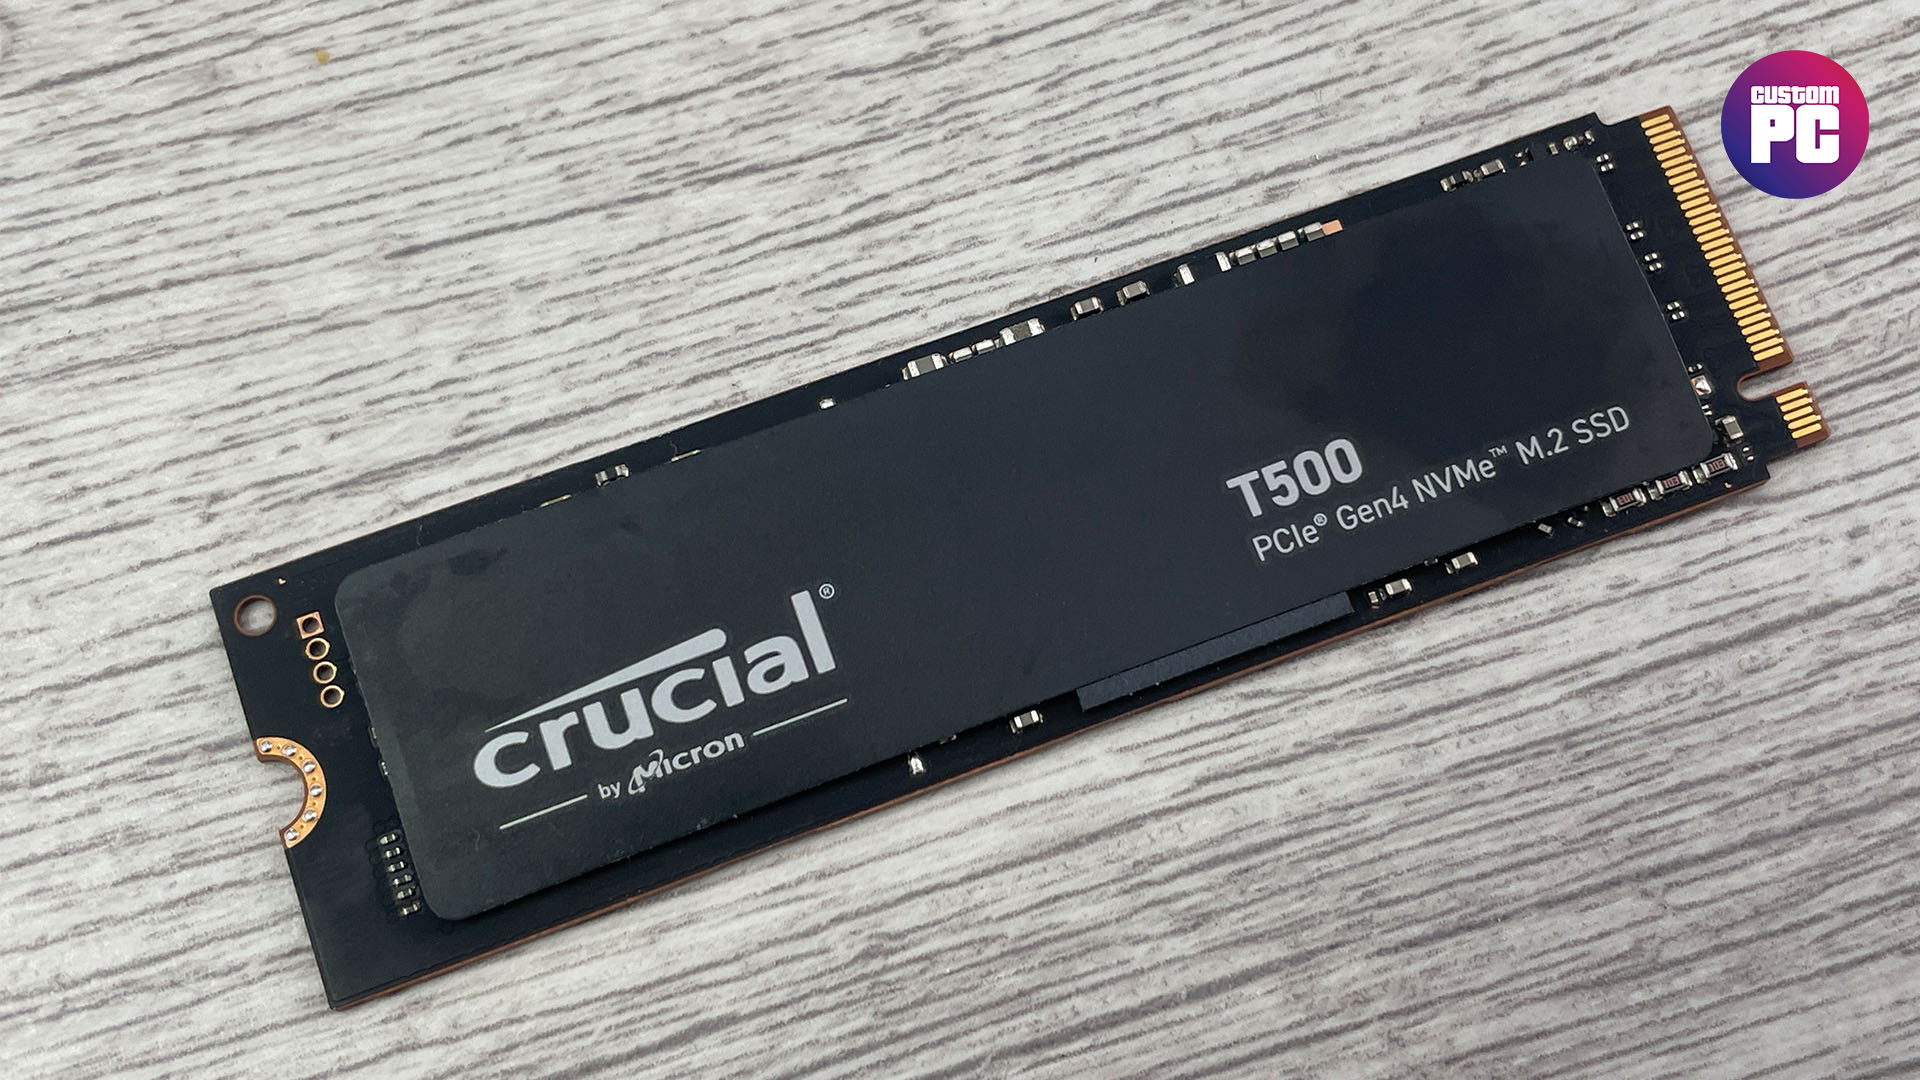  Crucial T500 1TB Gen4 NVMe M.2 Internal Gaming SSD, Up